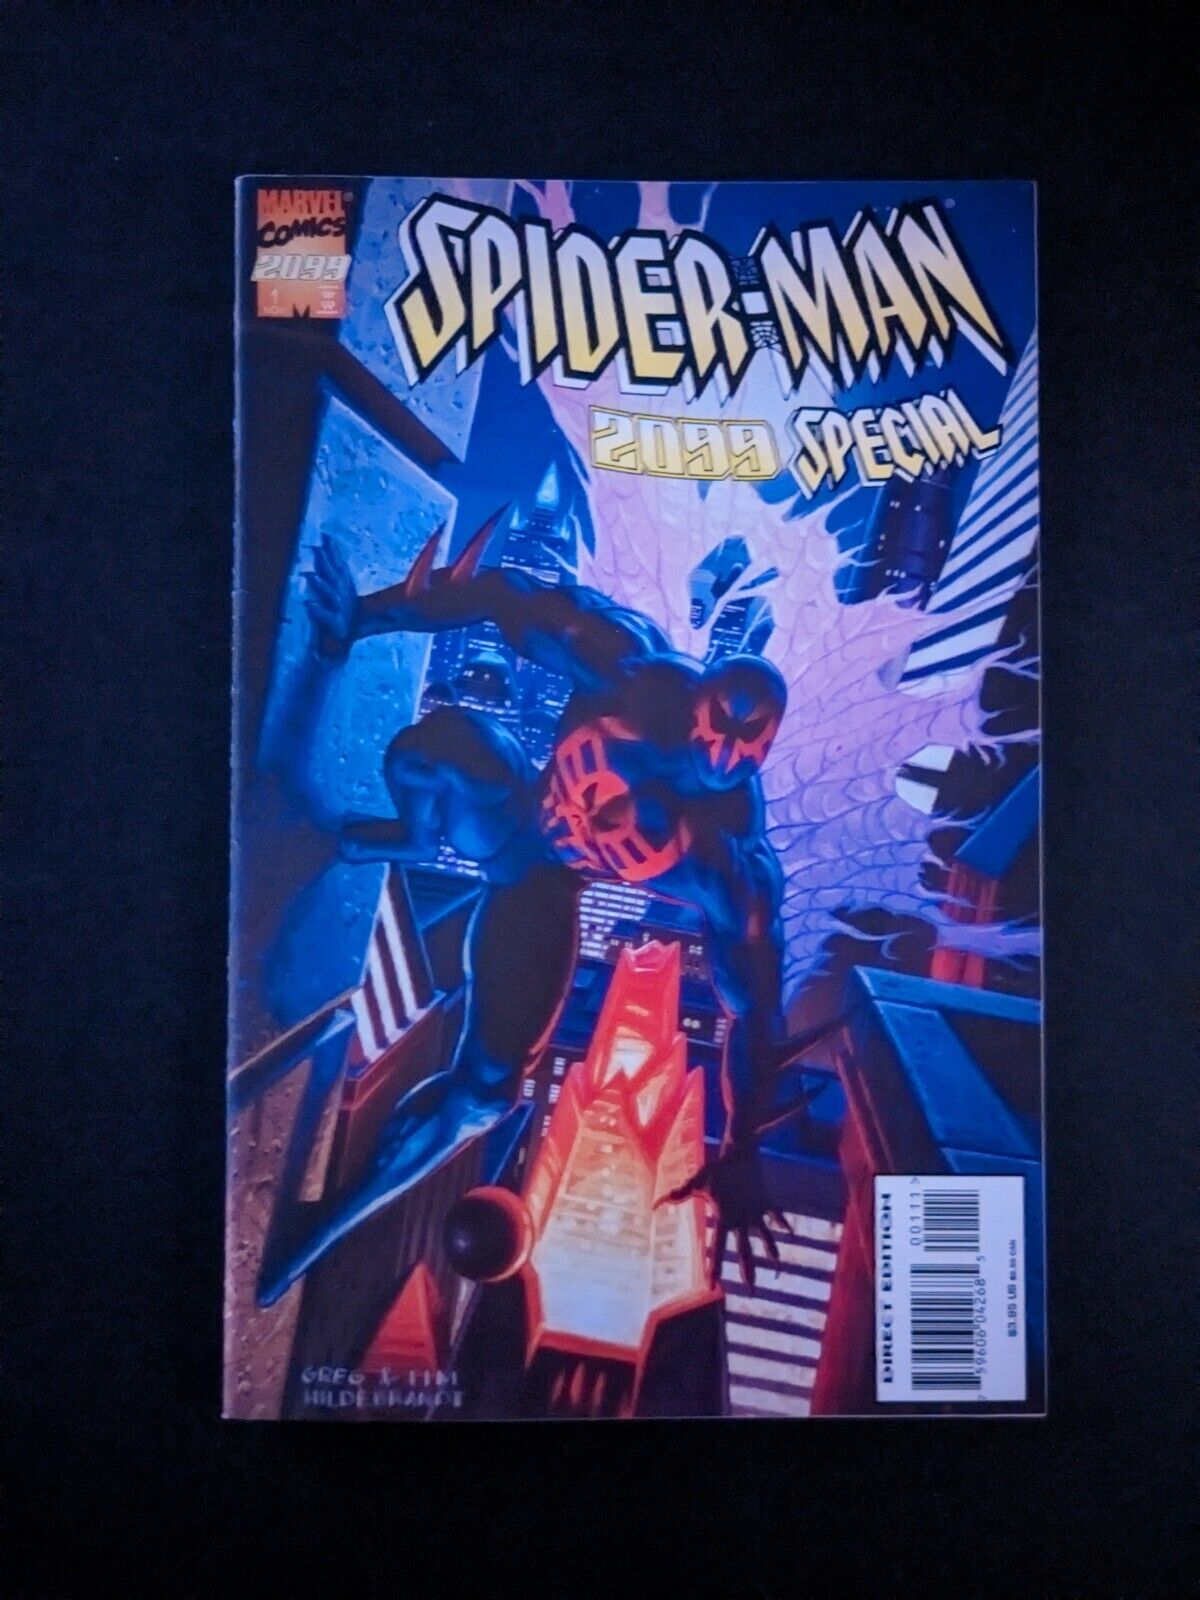 Spider-Man 2099 Special - Marvel Comics 